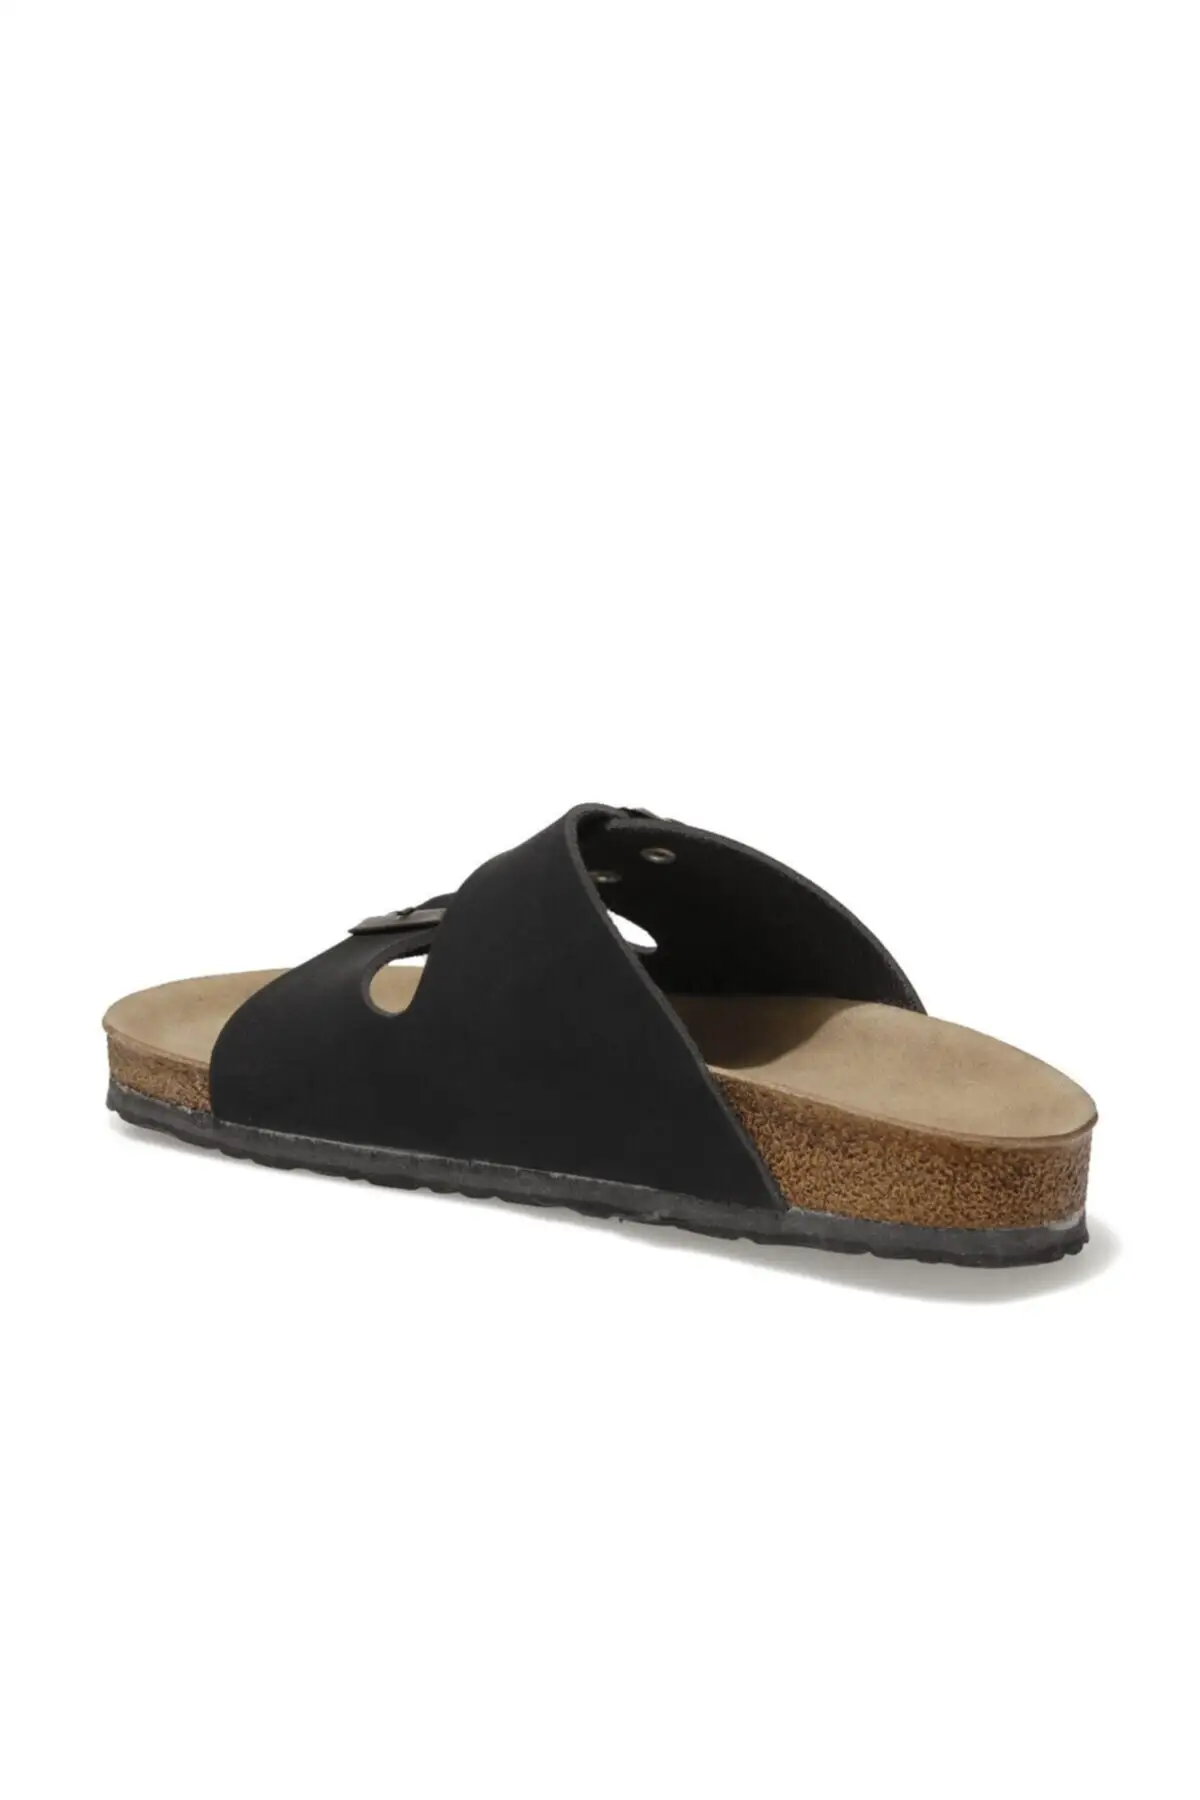 

Women Sandals. Z fx black female mushroom Summer Indoor Outdoor Flip Flops Beach Shoe Female Slippers Platform Casual